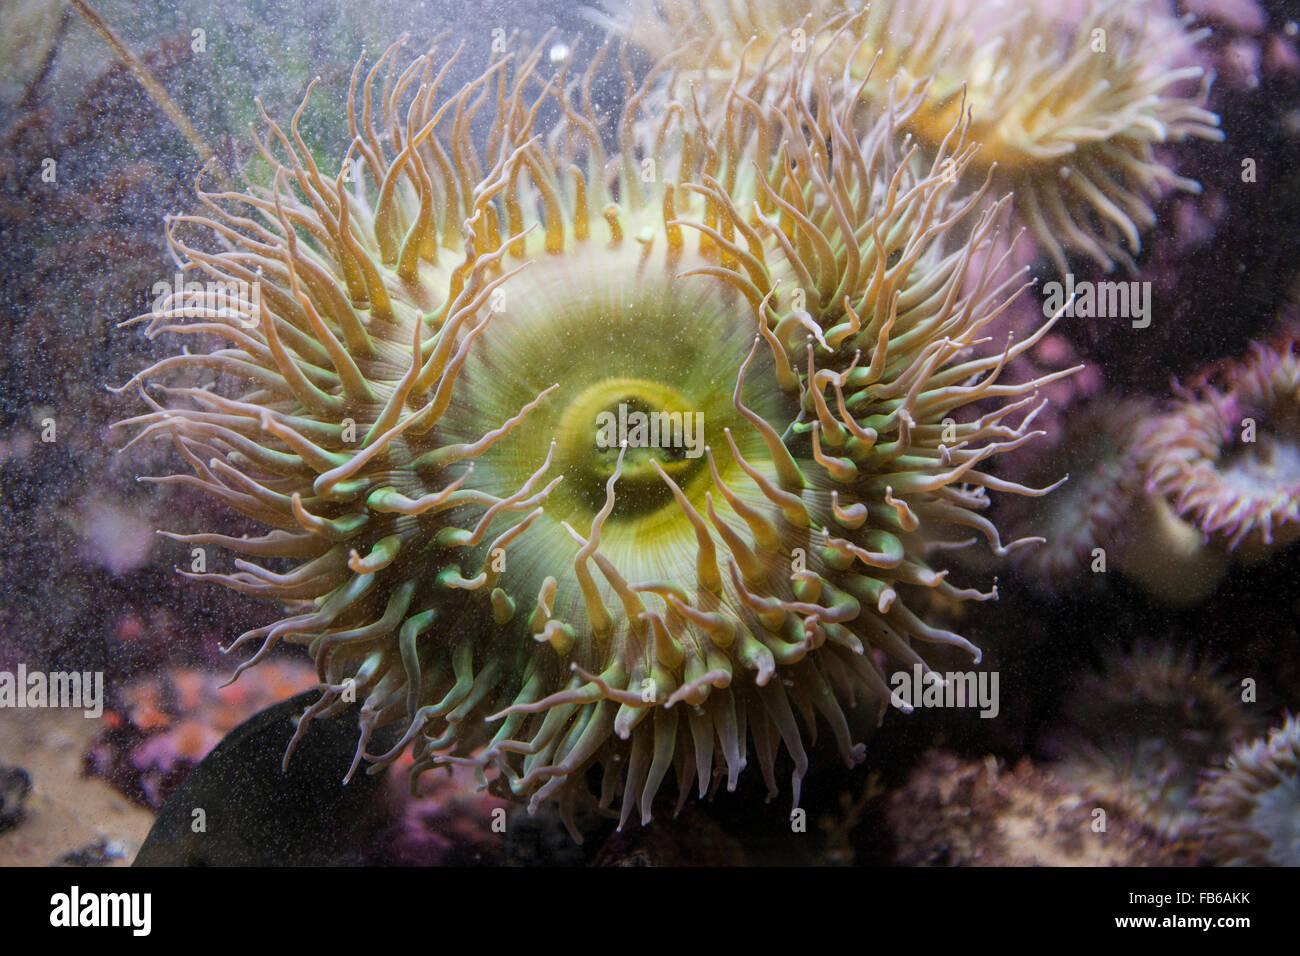 Verde gigante (anemone Anthopleura xanthogrammica), Monterey Bay Aquarium, Monterey, California, Stati Uniti d'America Foto Stock